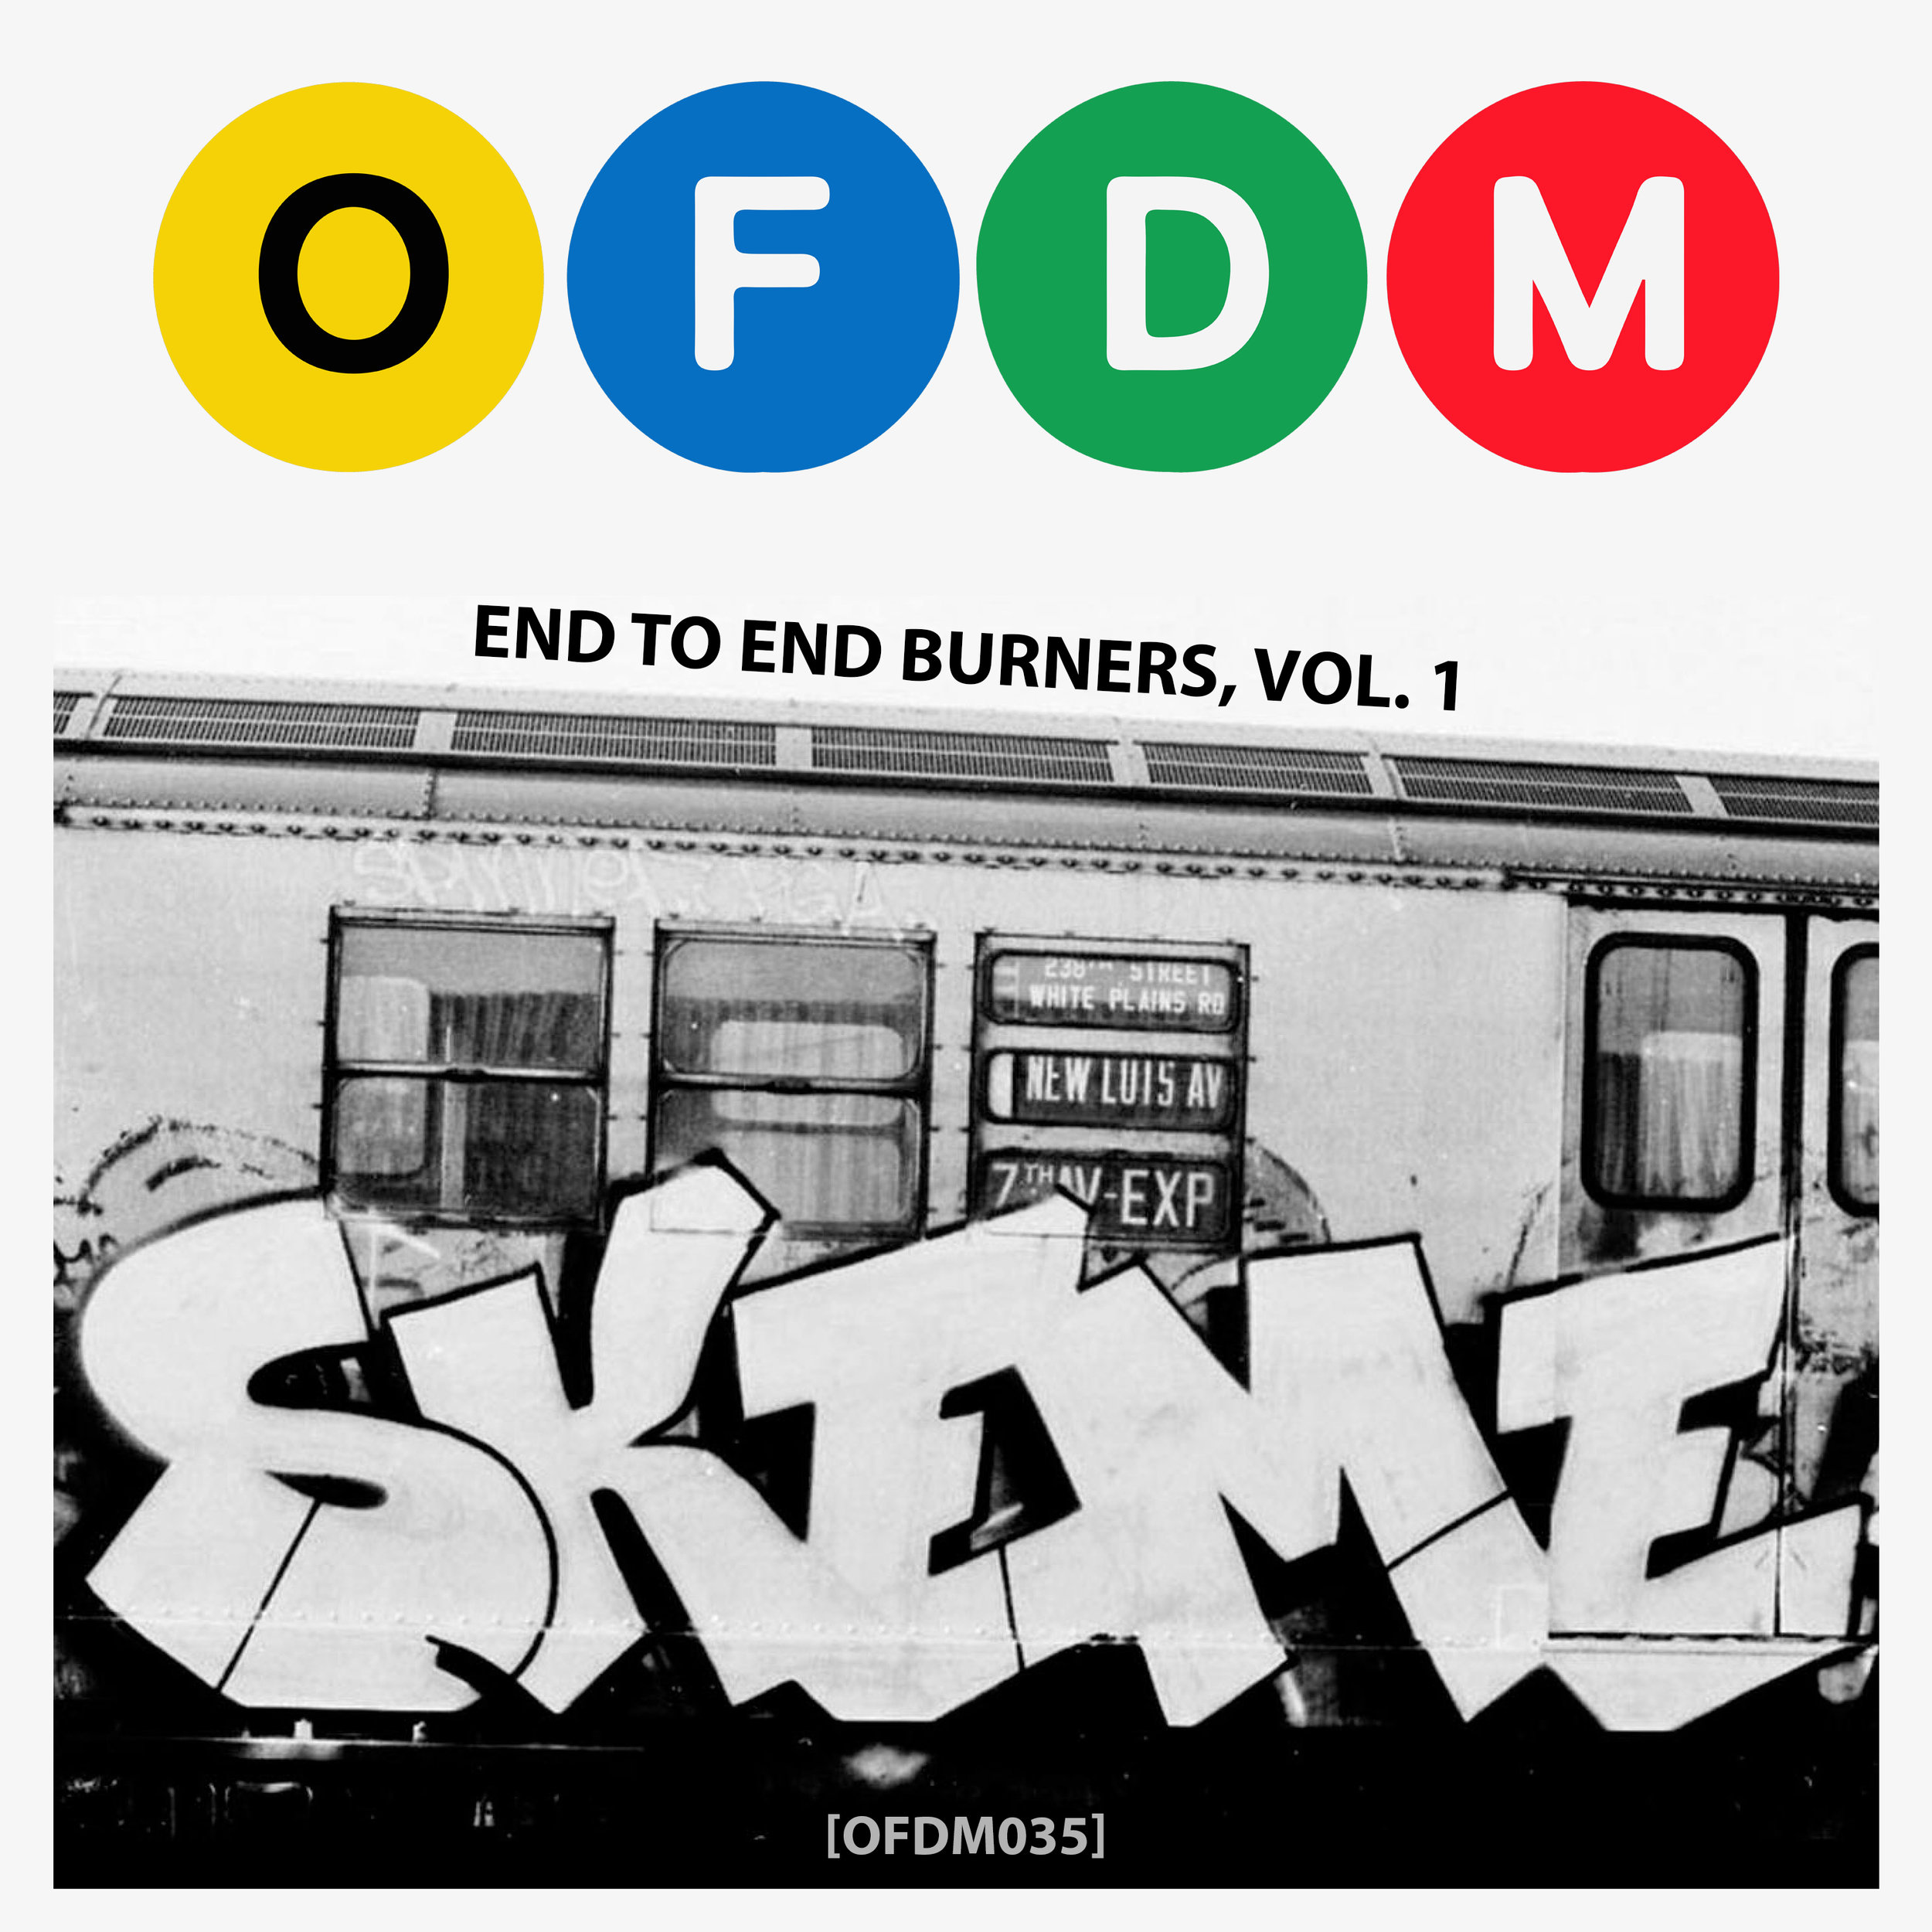 [OFDM035] VA - End To End Burners, Vol. 1 (ARTWORK).jpg